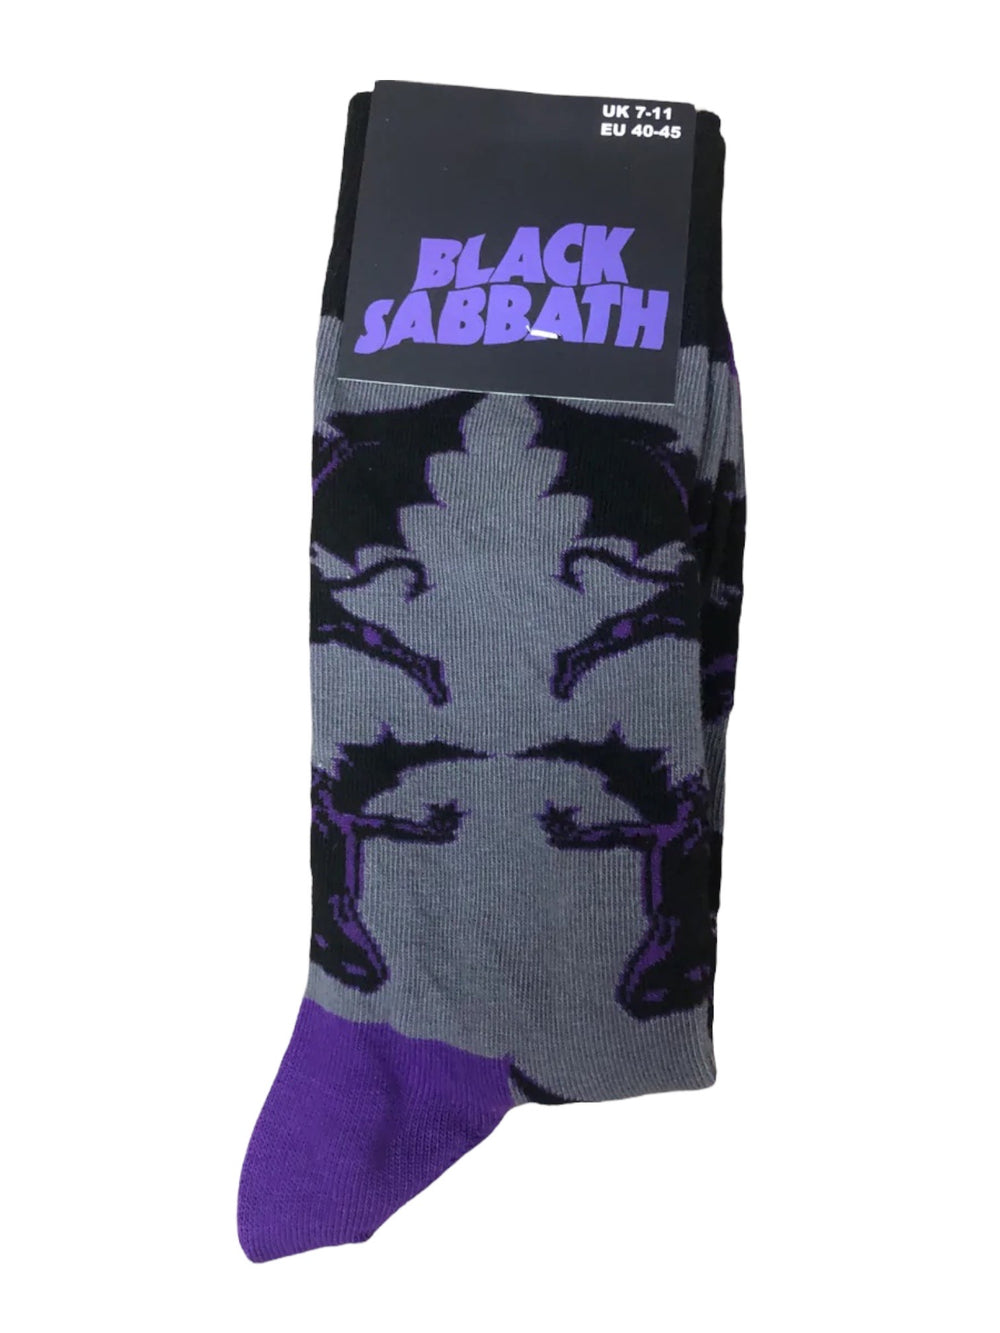 Black Sabbath Demons Official Product 1 Pair Jacquard Socks Brand New